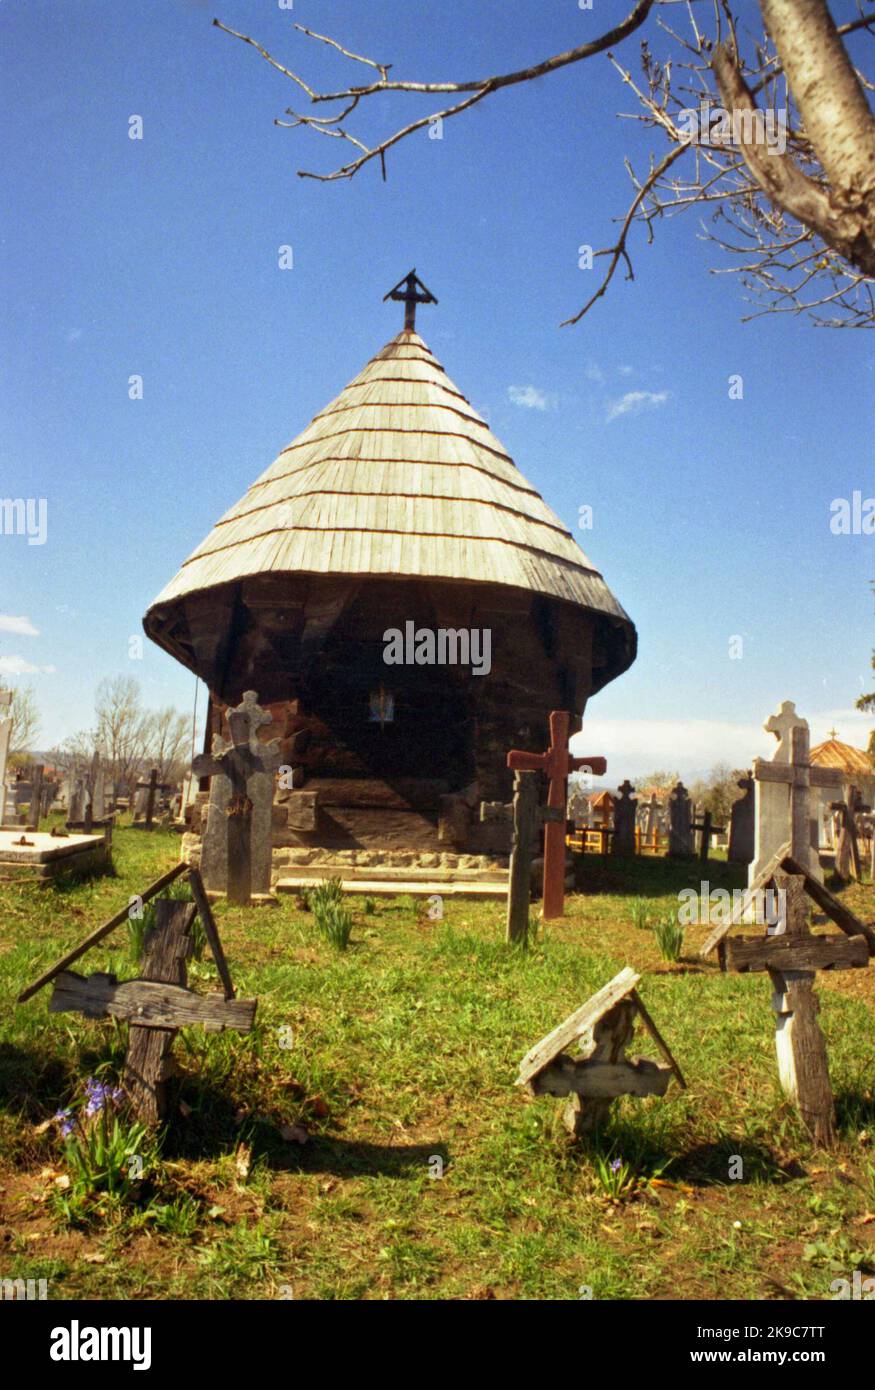 Homita, Condado de Gorj, Rumania, 2000. Vista exterior de la iglesia de madera ortodoxa cristiana del siglo 18th, monumento histórico. Foto de stock